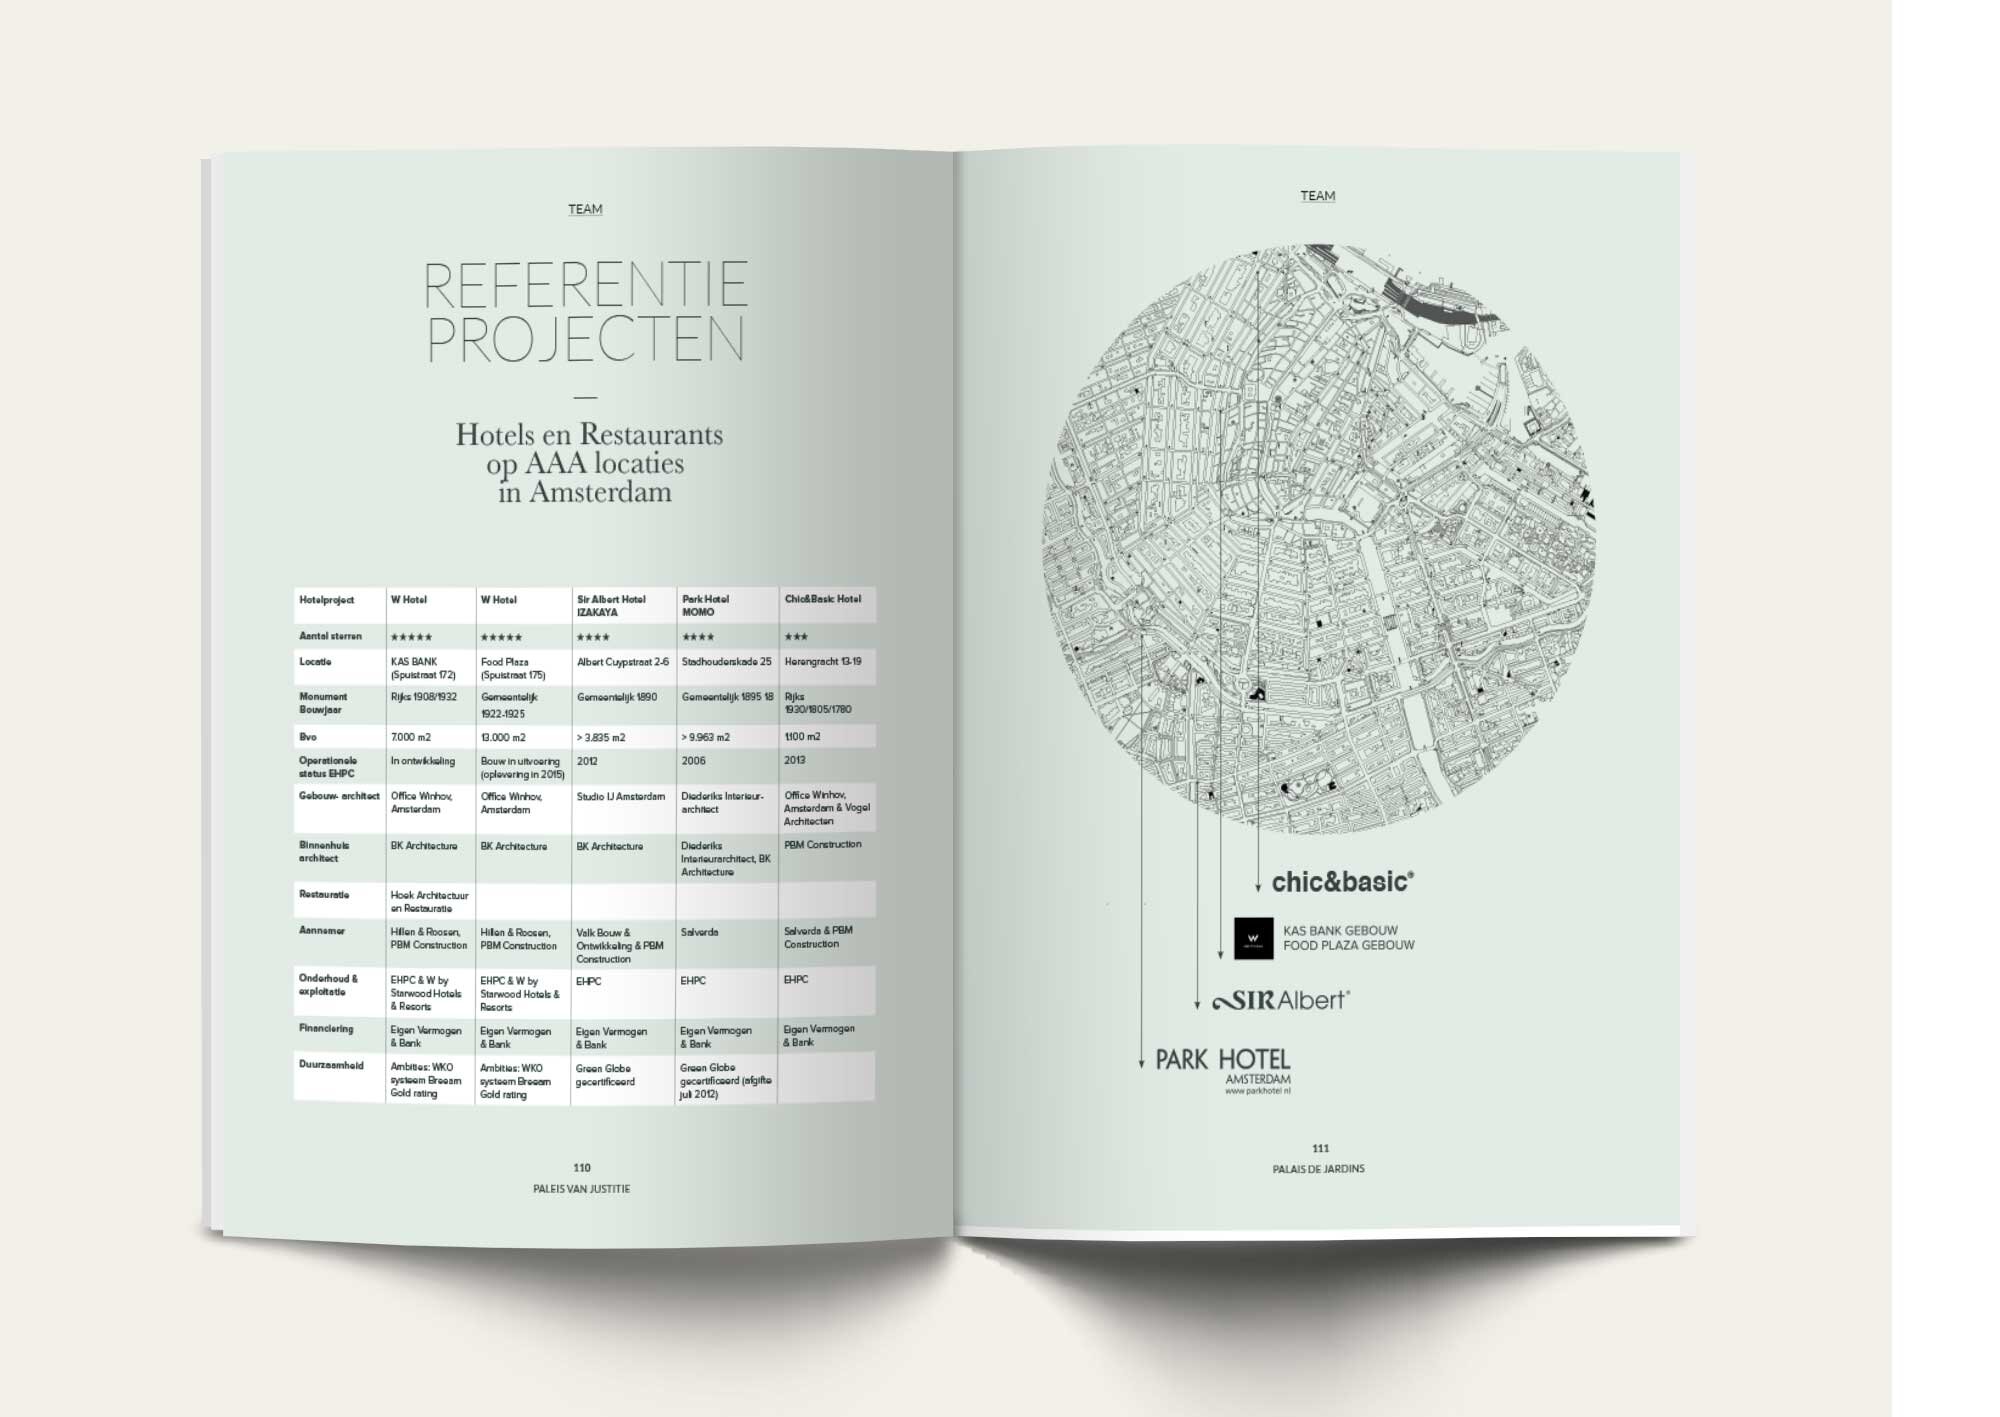 Kazeze-graphic-design-amsterdam-ehpc-office-winhov-prijsvraag-palais-de-jardin-13.jpg